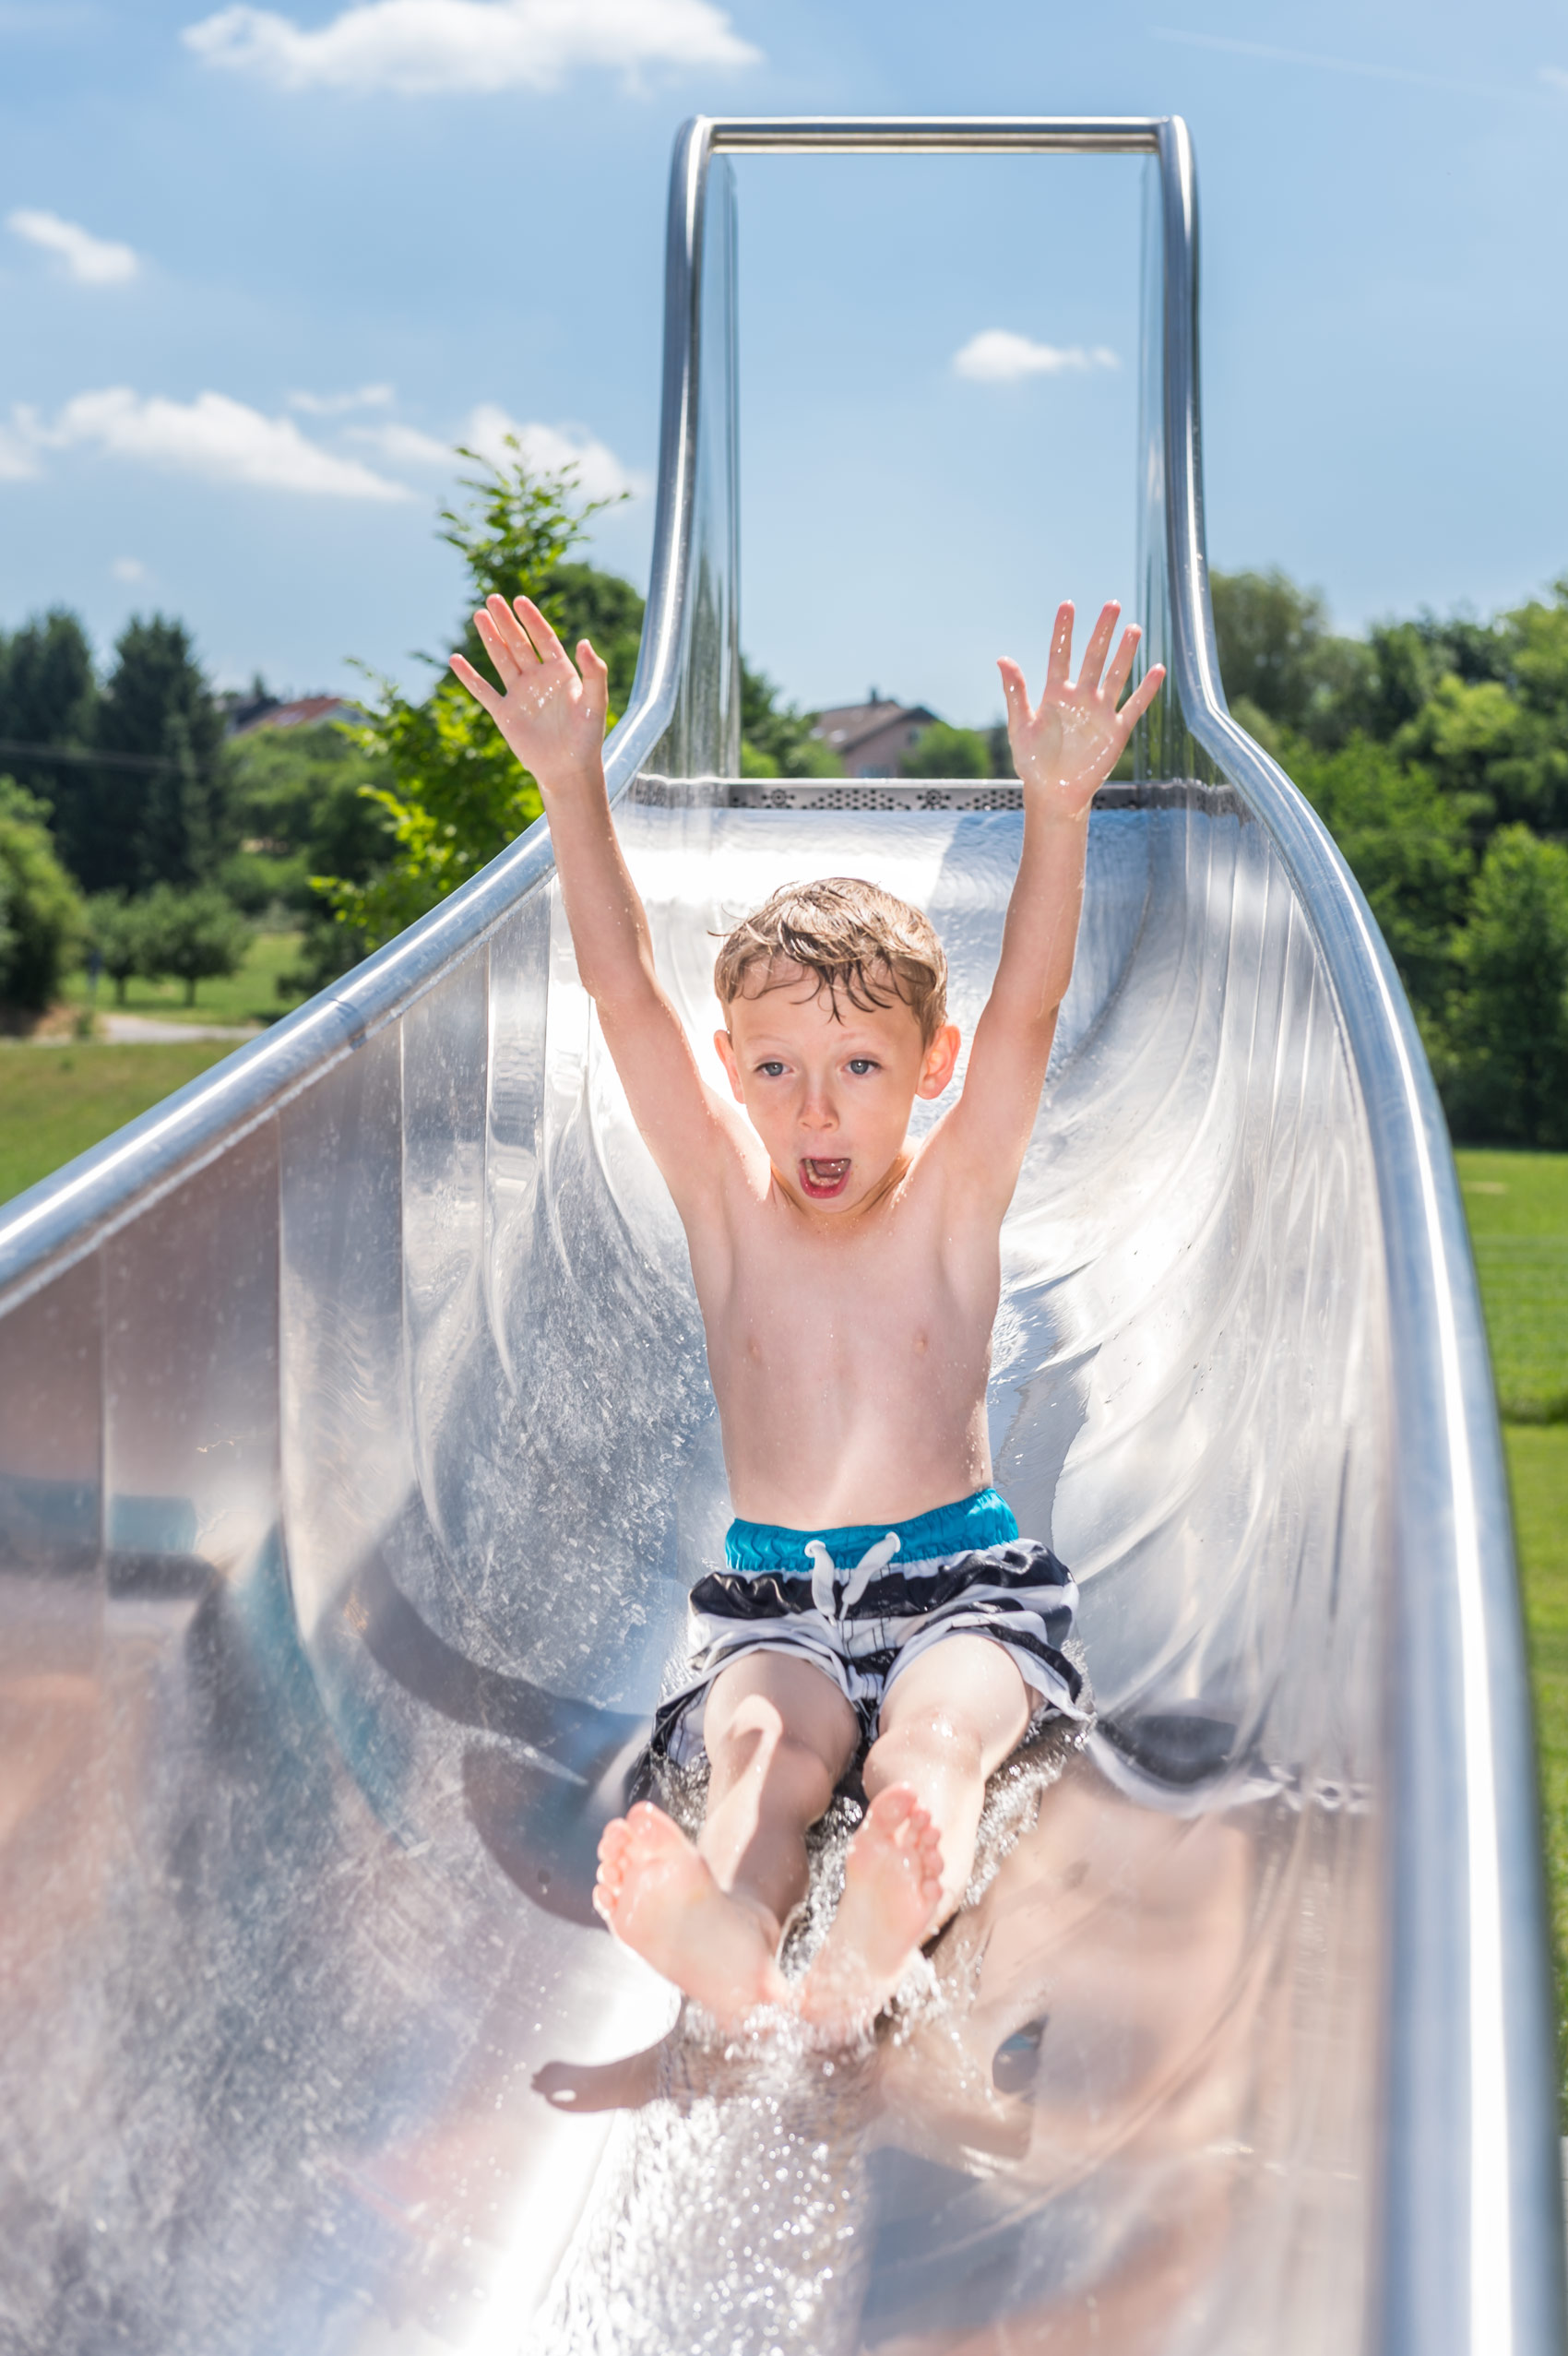 Child on water slide atlantics stainless steel slides open air swimming pool flehingen oberthedingen bathroomen wuerttemberg pool 168105